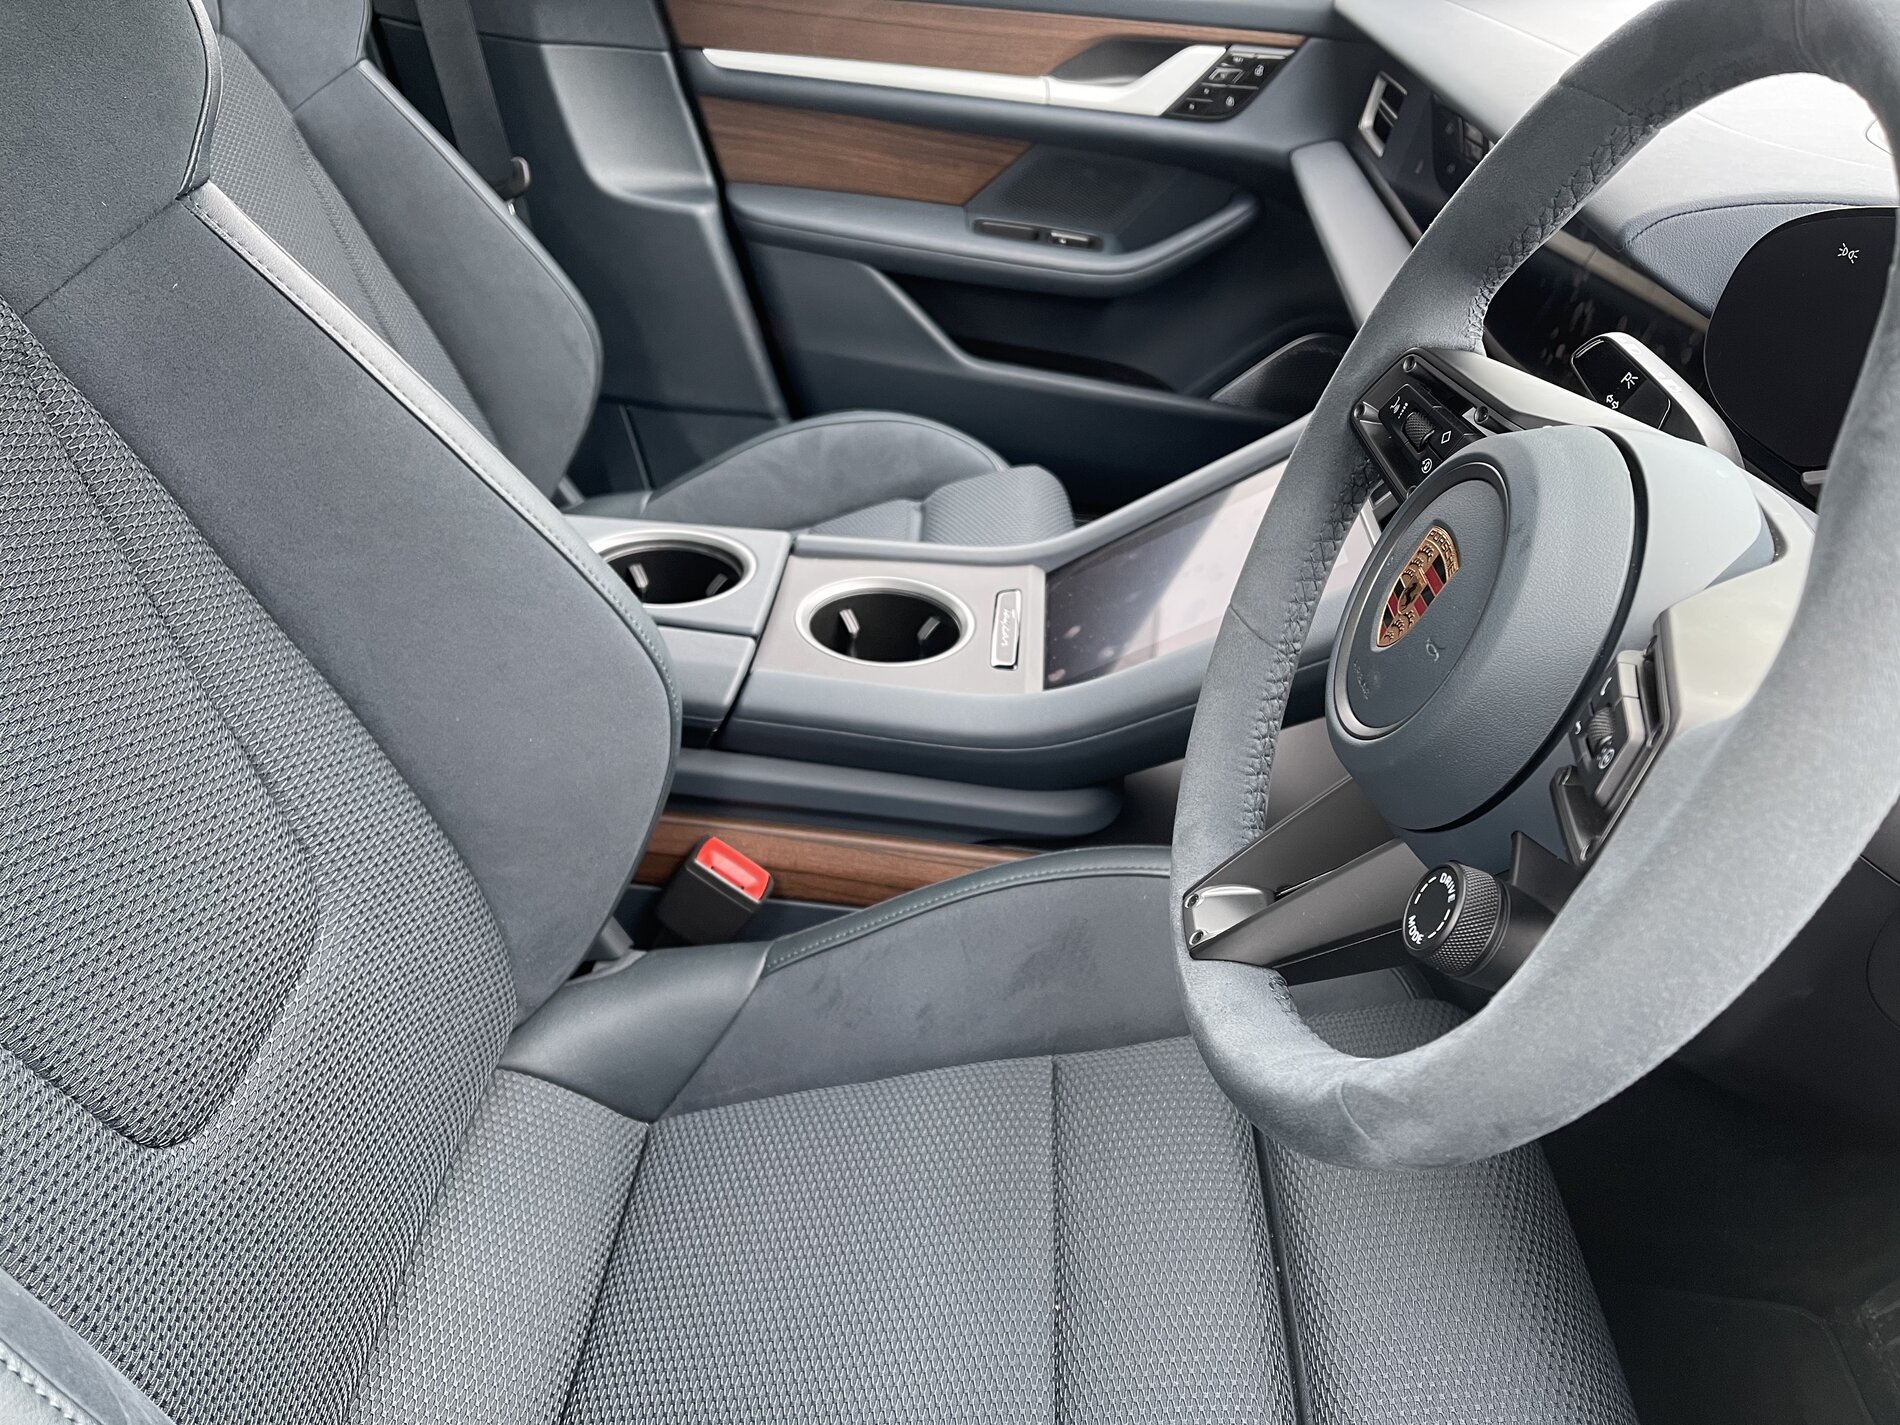 Porsche Taycan Request: “Interior Accents in Exterior Color” 1626977383735